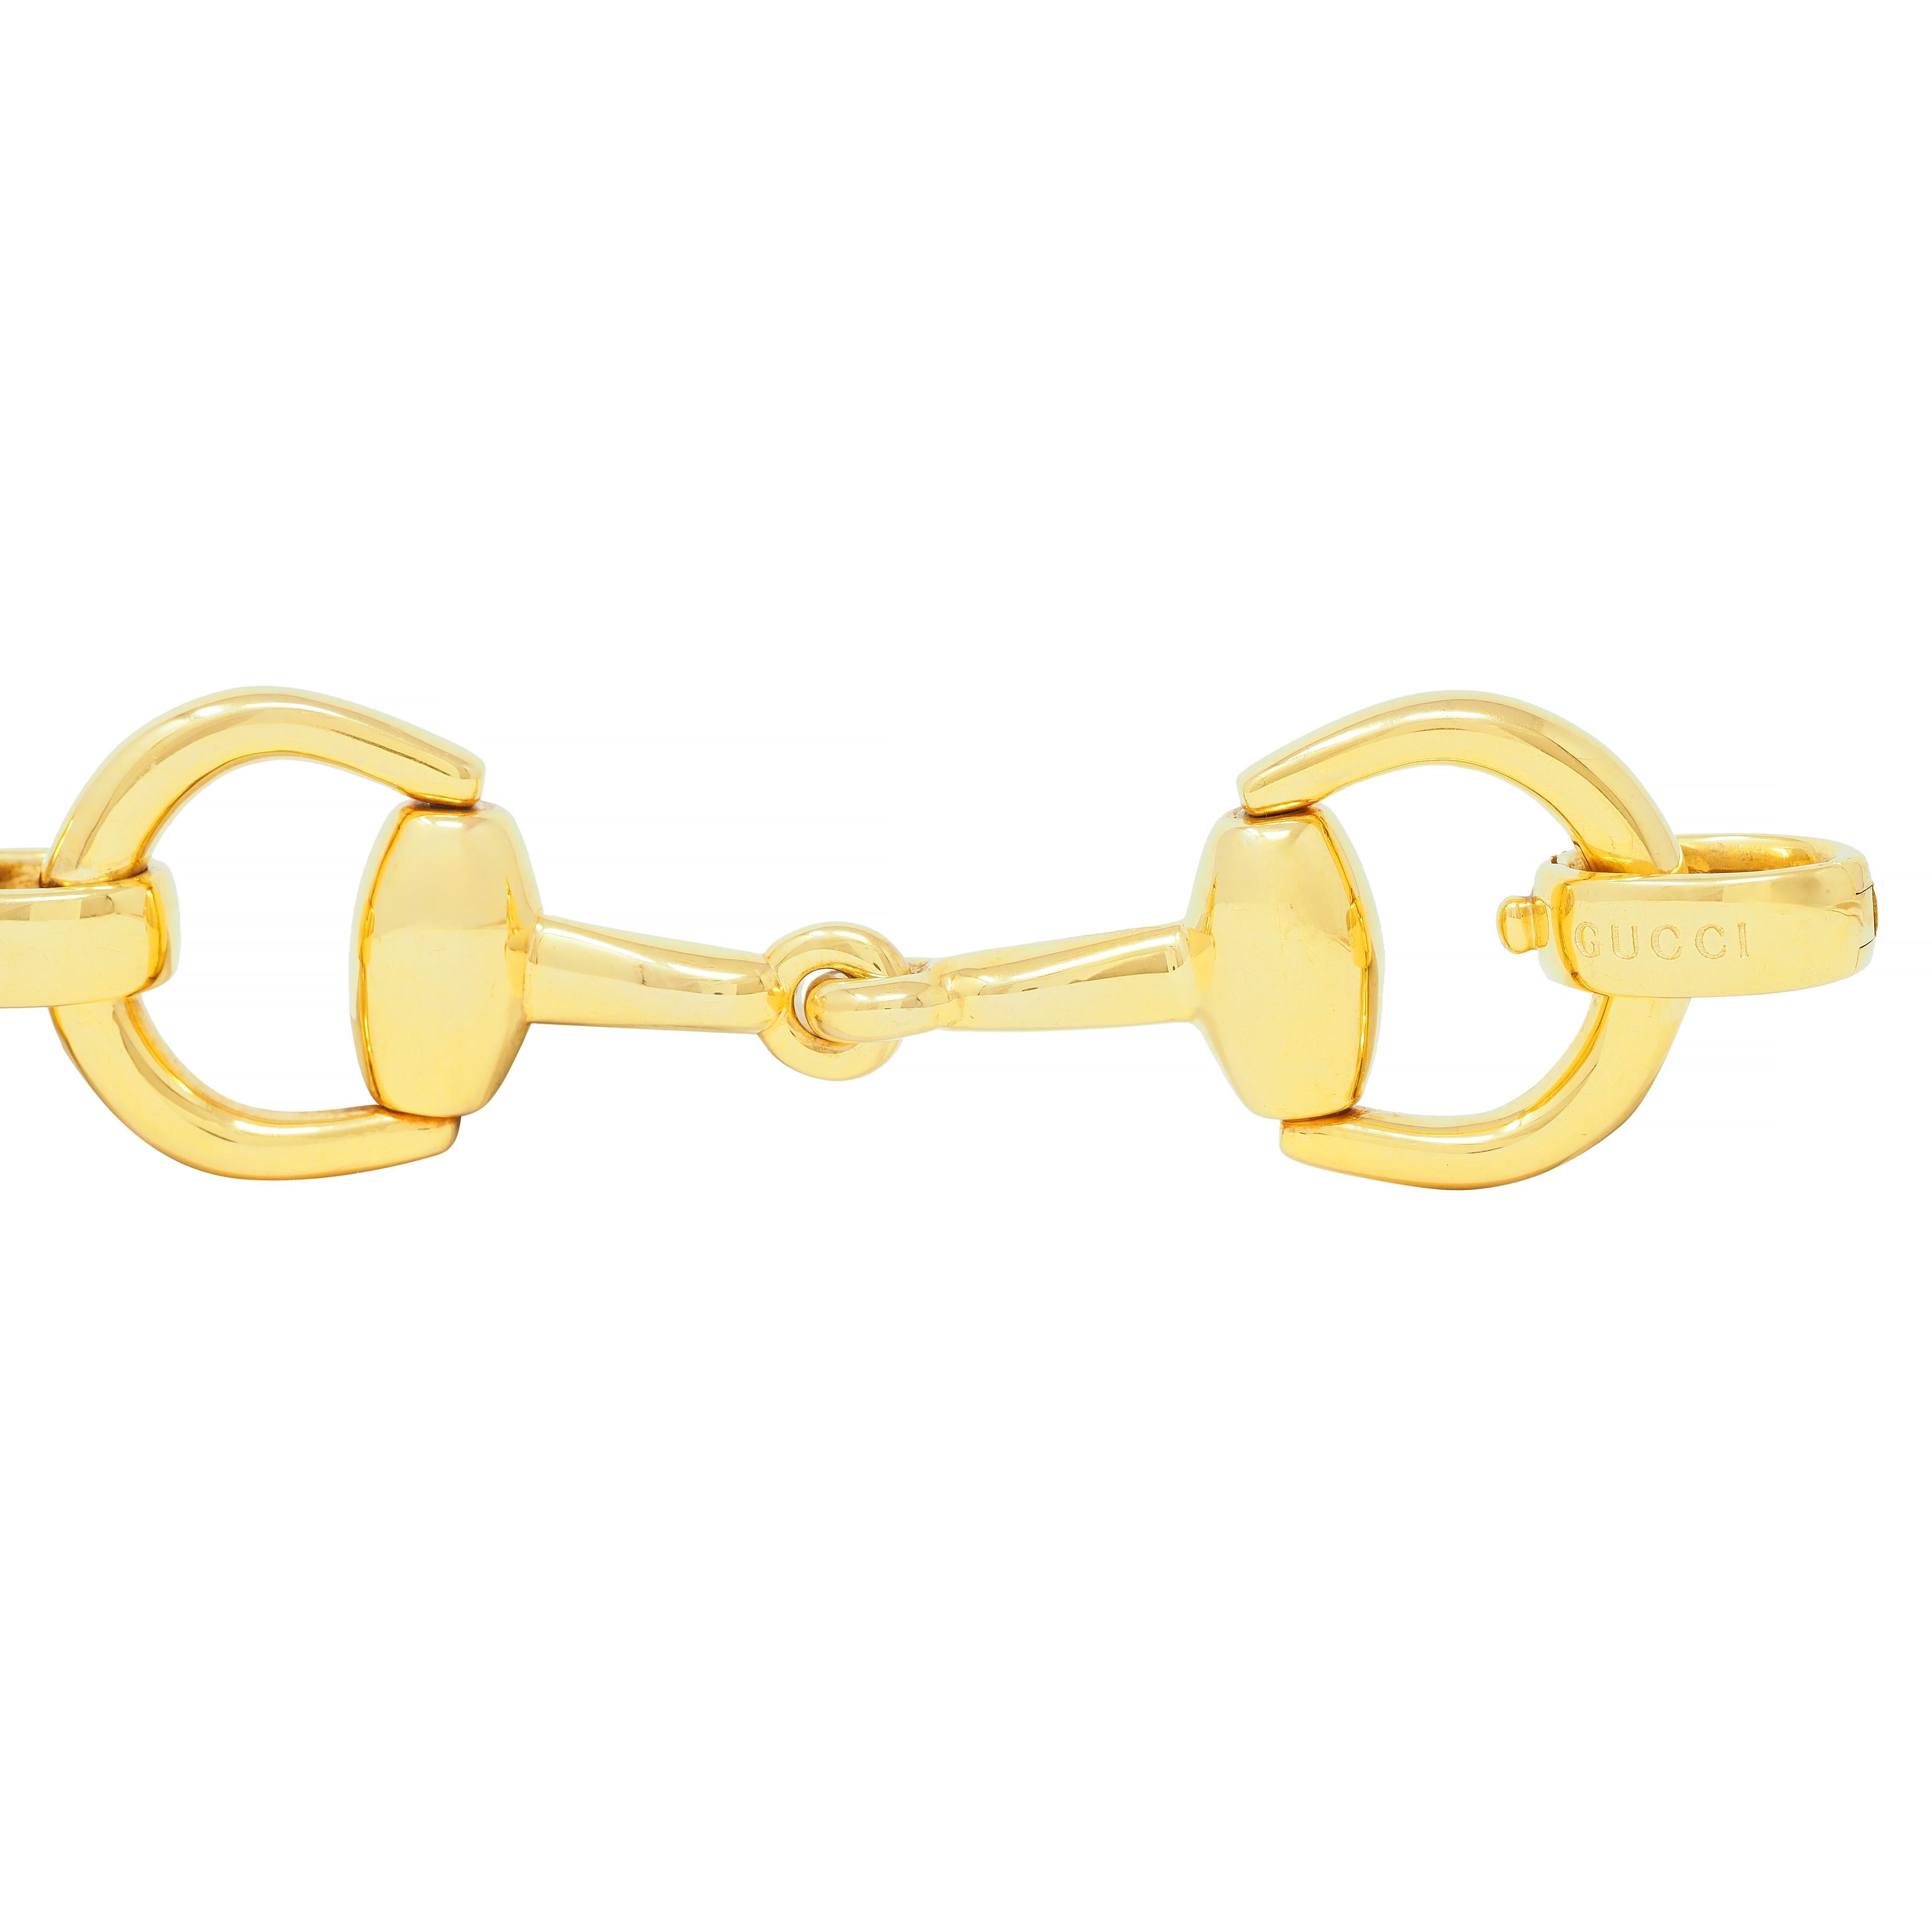 Gucci 18 Karat Yellow Gold Horsebit Vintage Link Bracelet For Sale 4